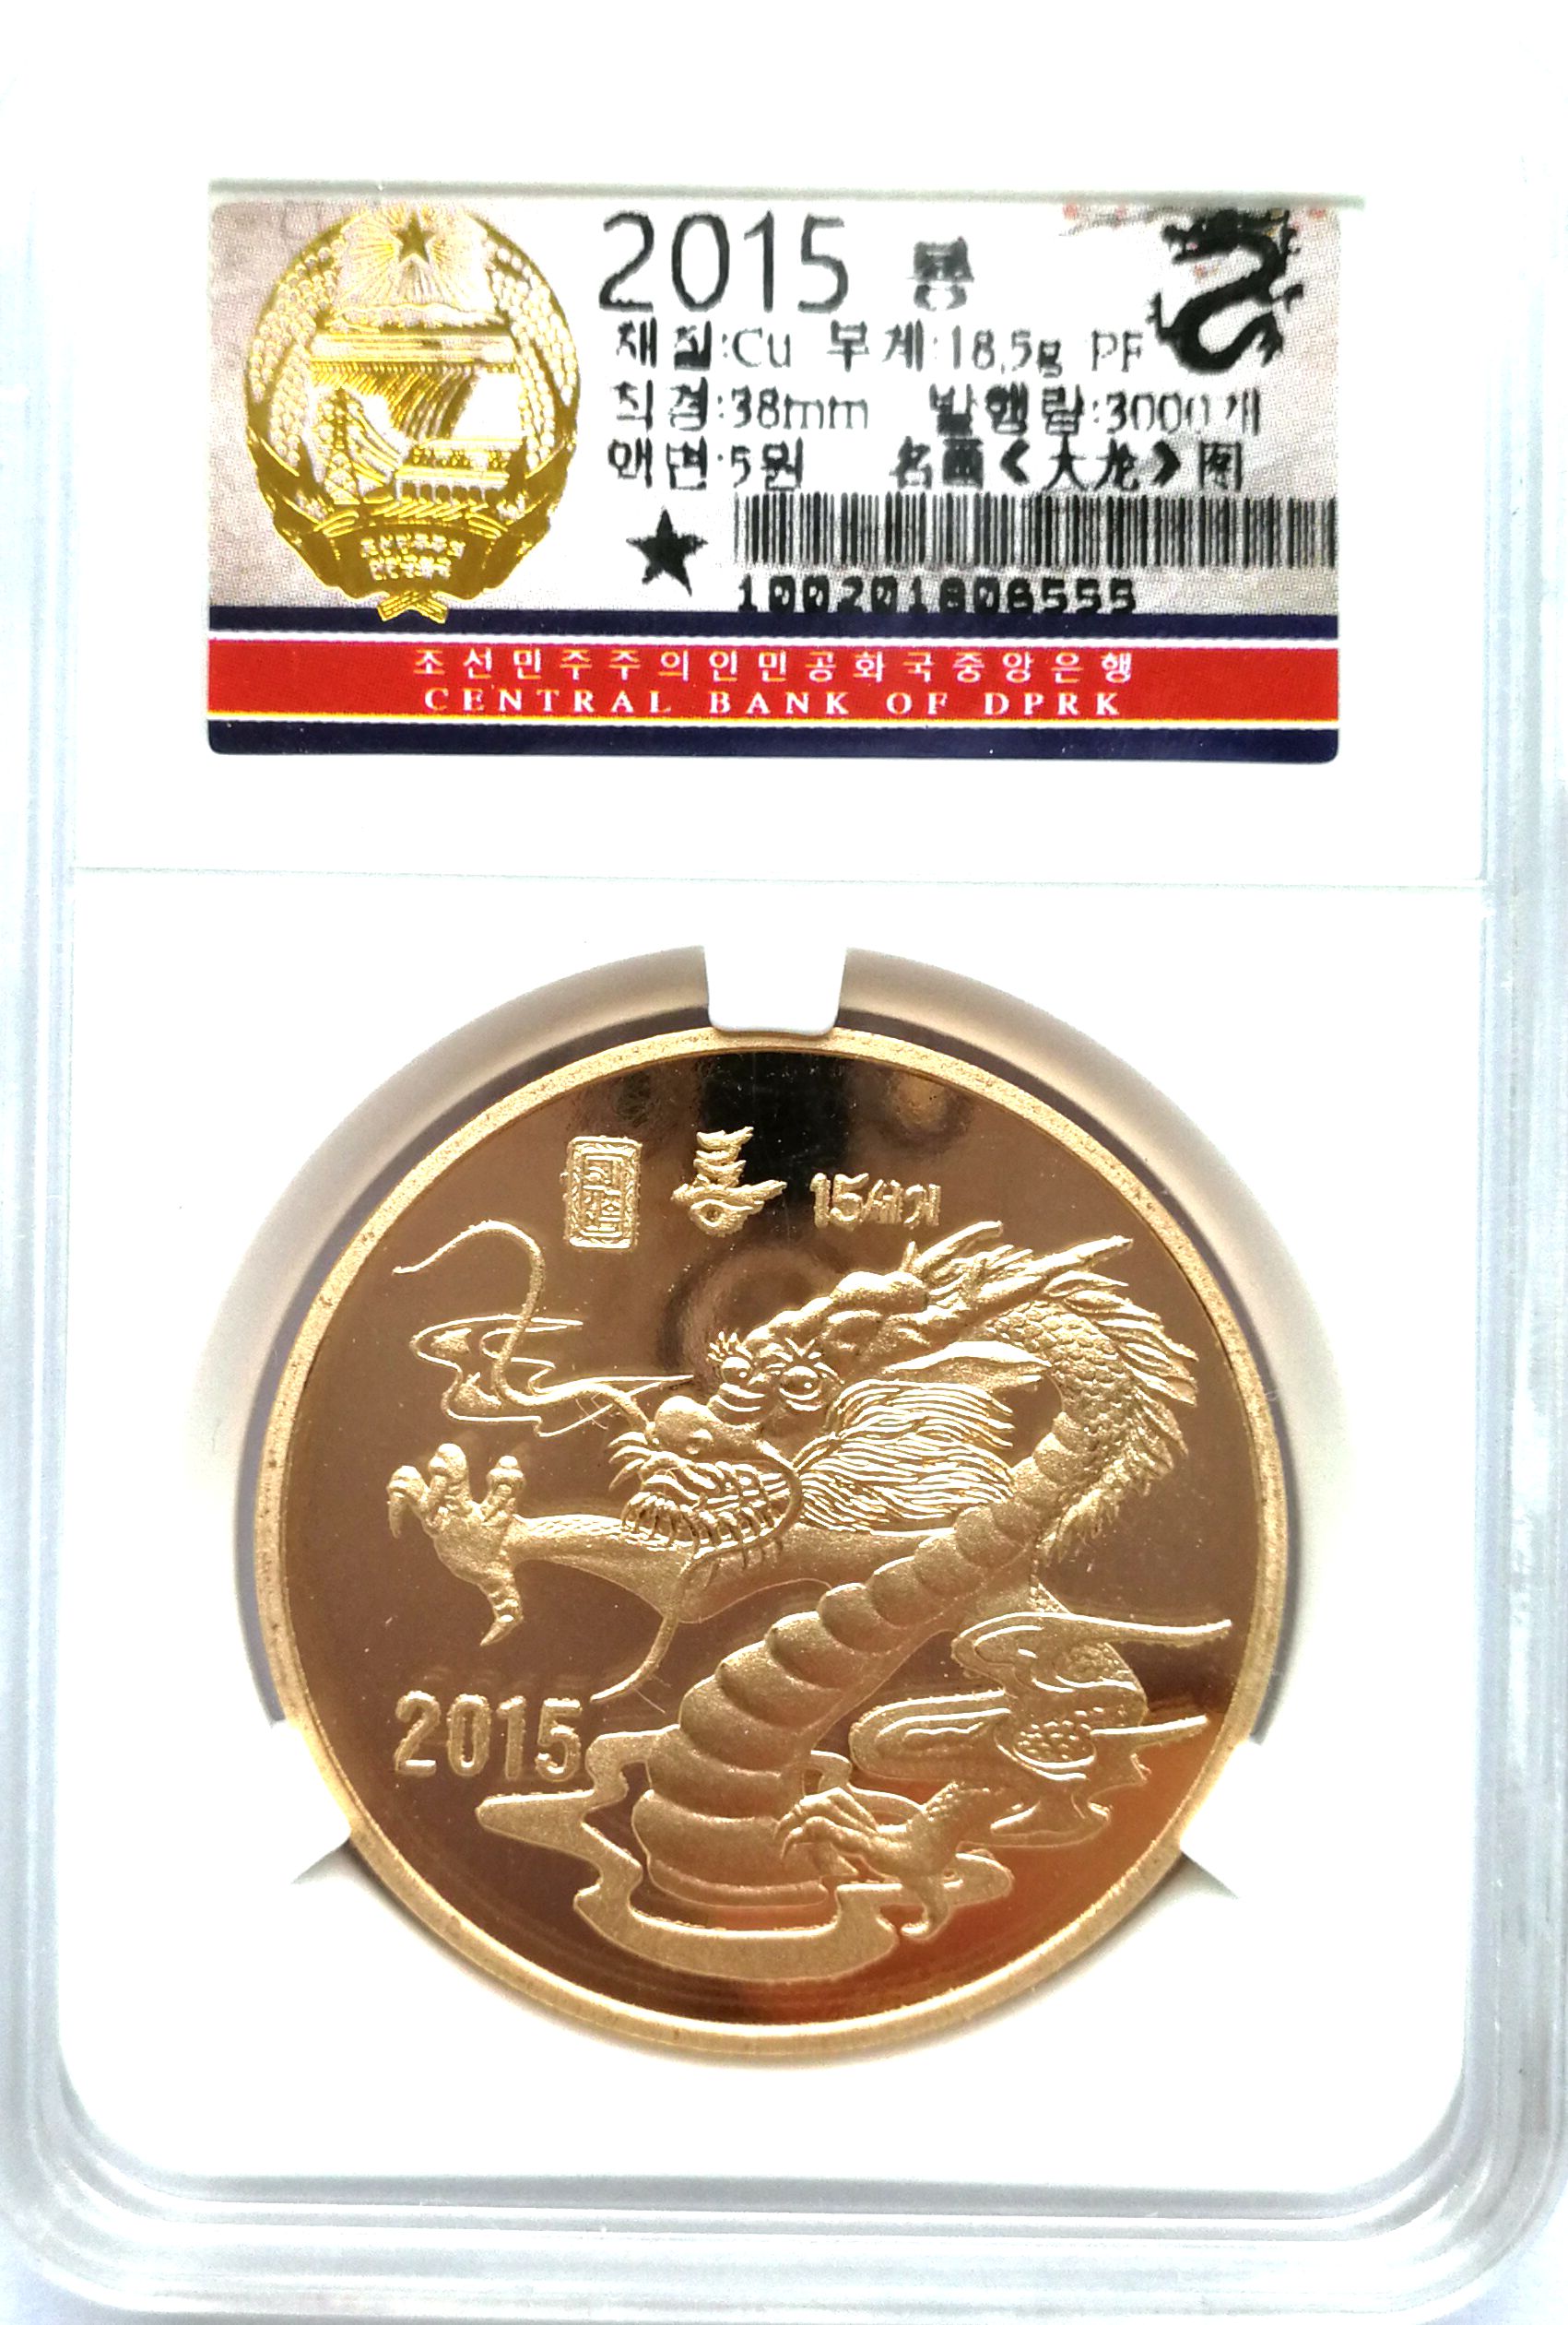 L3203, Korea "Flying Dragon" Brass Coin 5 Wons, 2015 Korean Original Grade Box